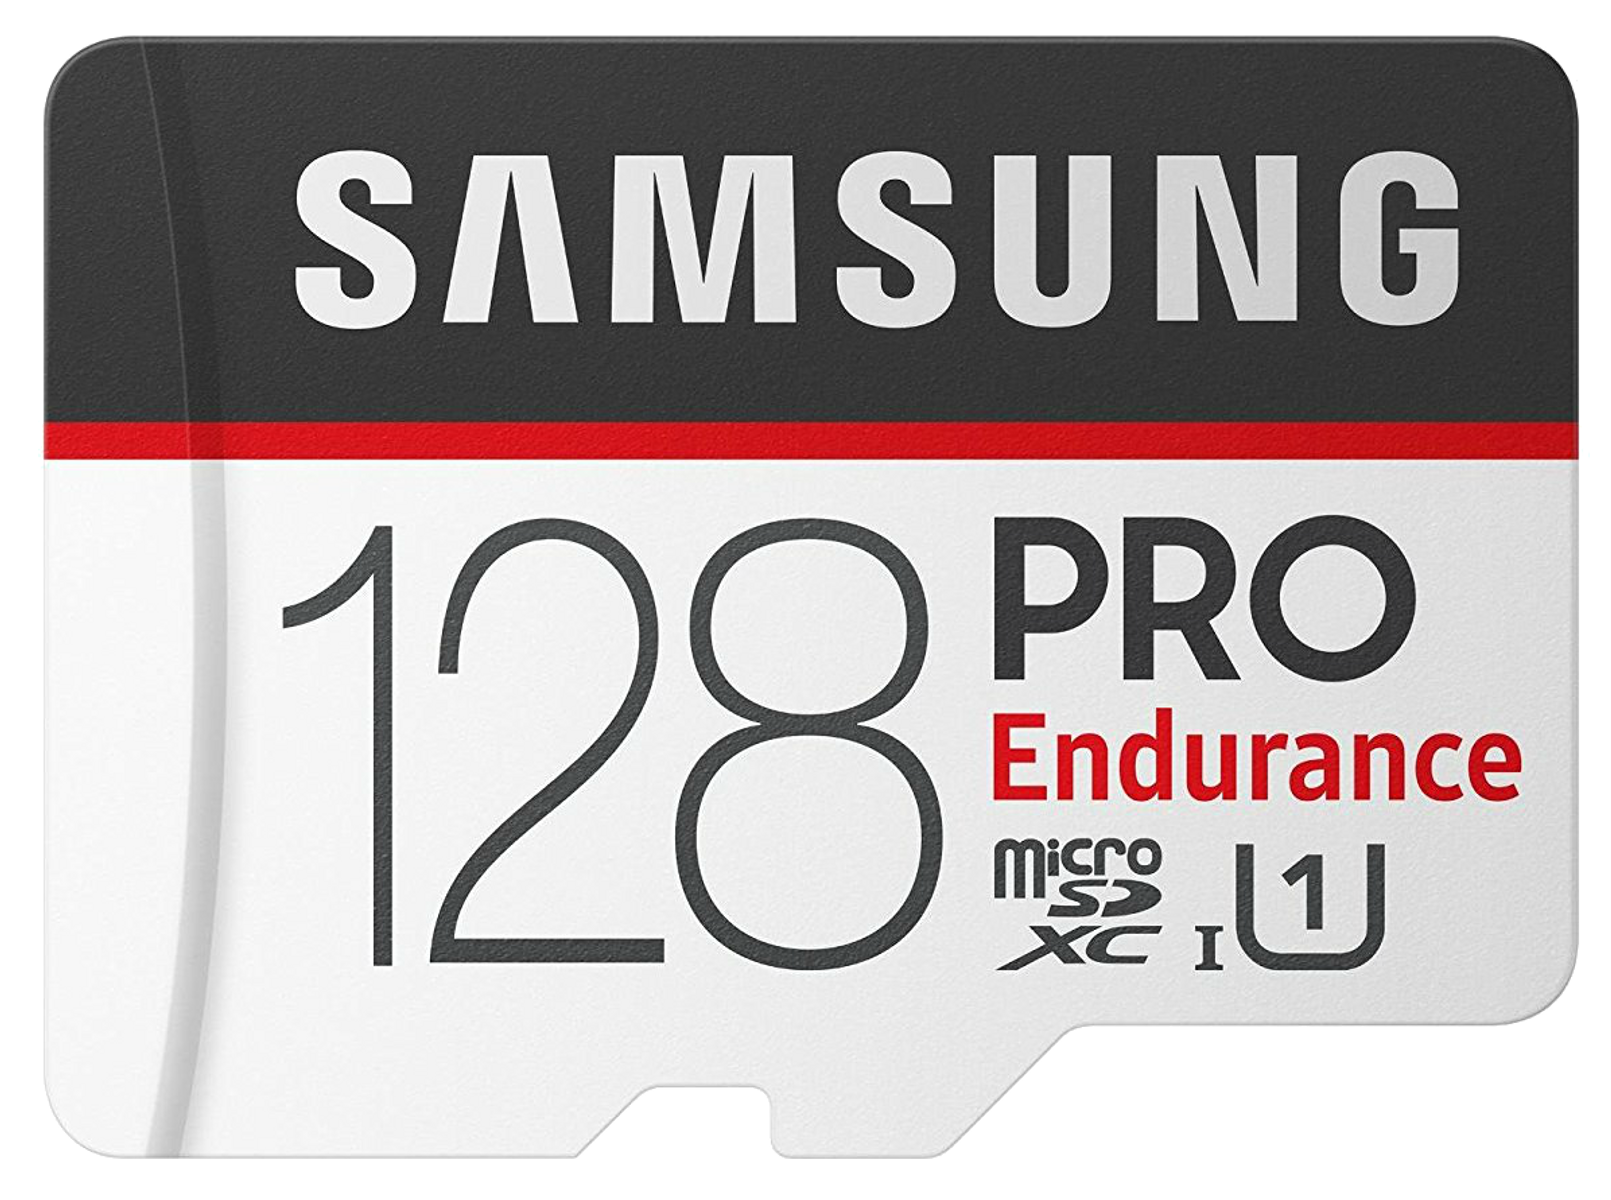 128GB, 100 GB, 128 MB/s PRO Micro-SDHC SAMSUNG ENDURANCE Speicherkarte, MB-MJ128GA/EU